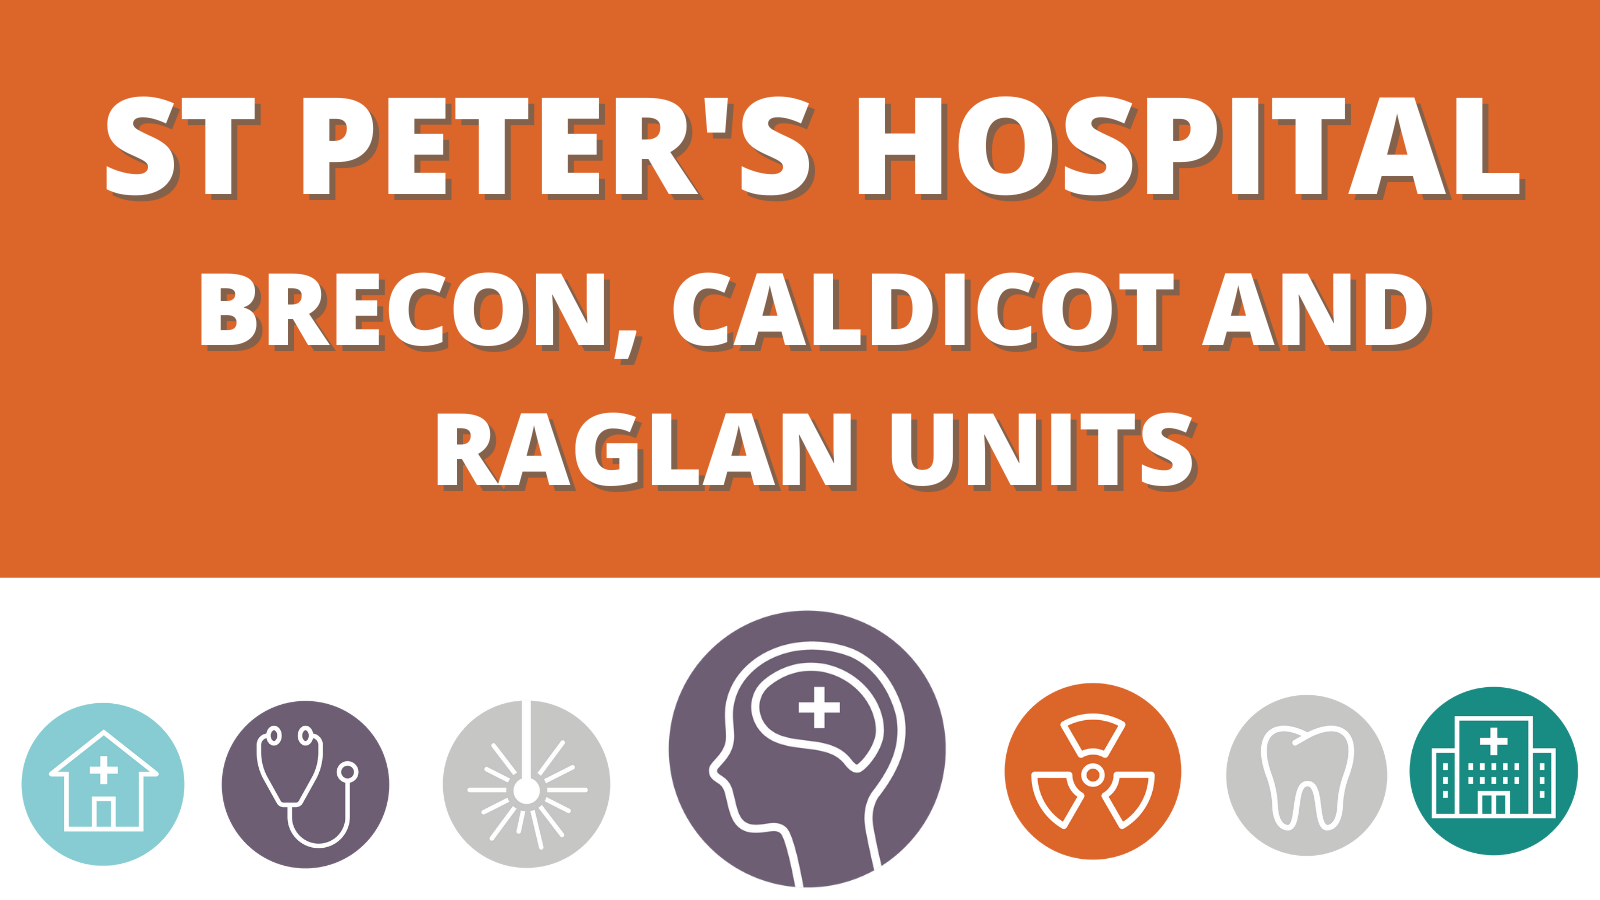 St Peter's Hospital - Brecon, Caldicot and Raglan Units